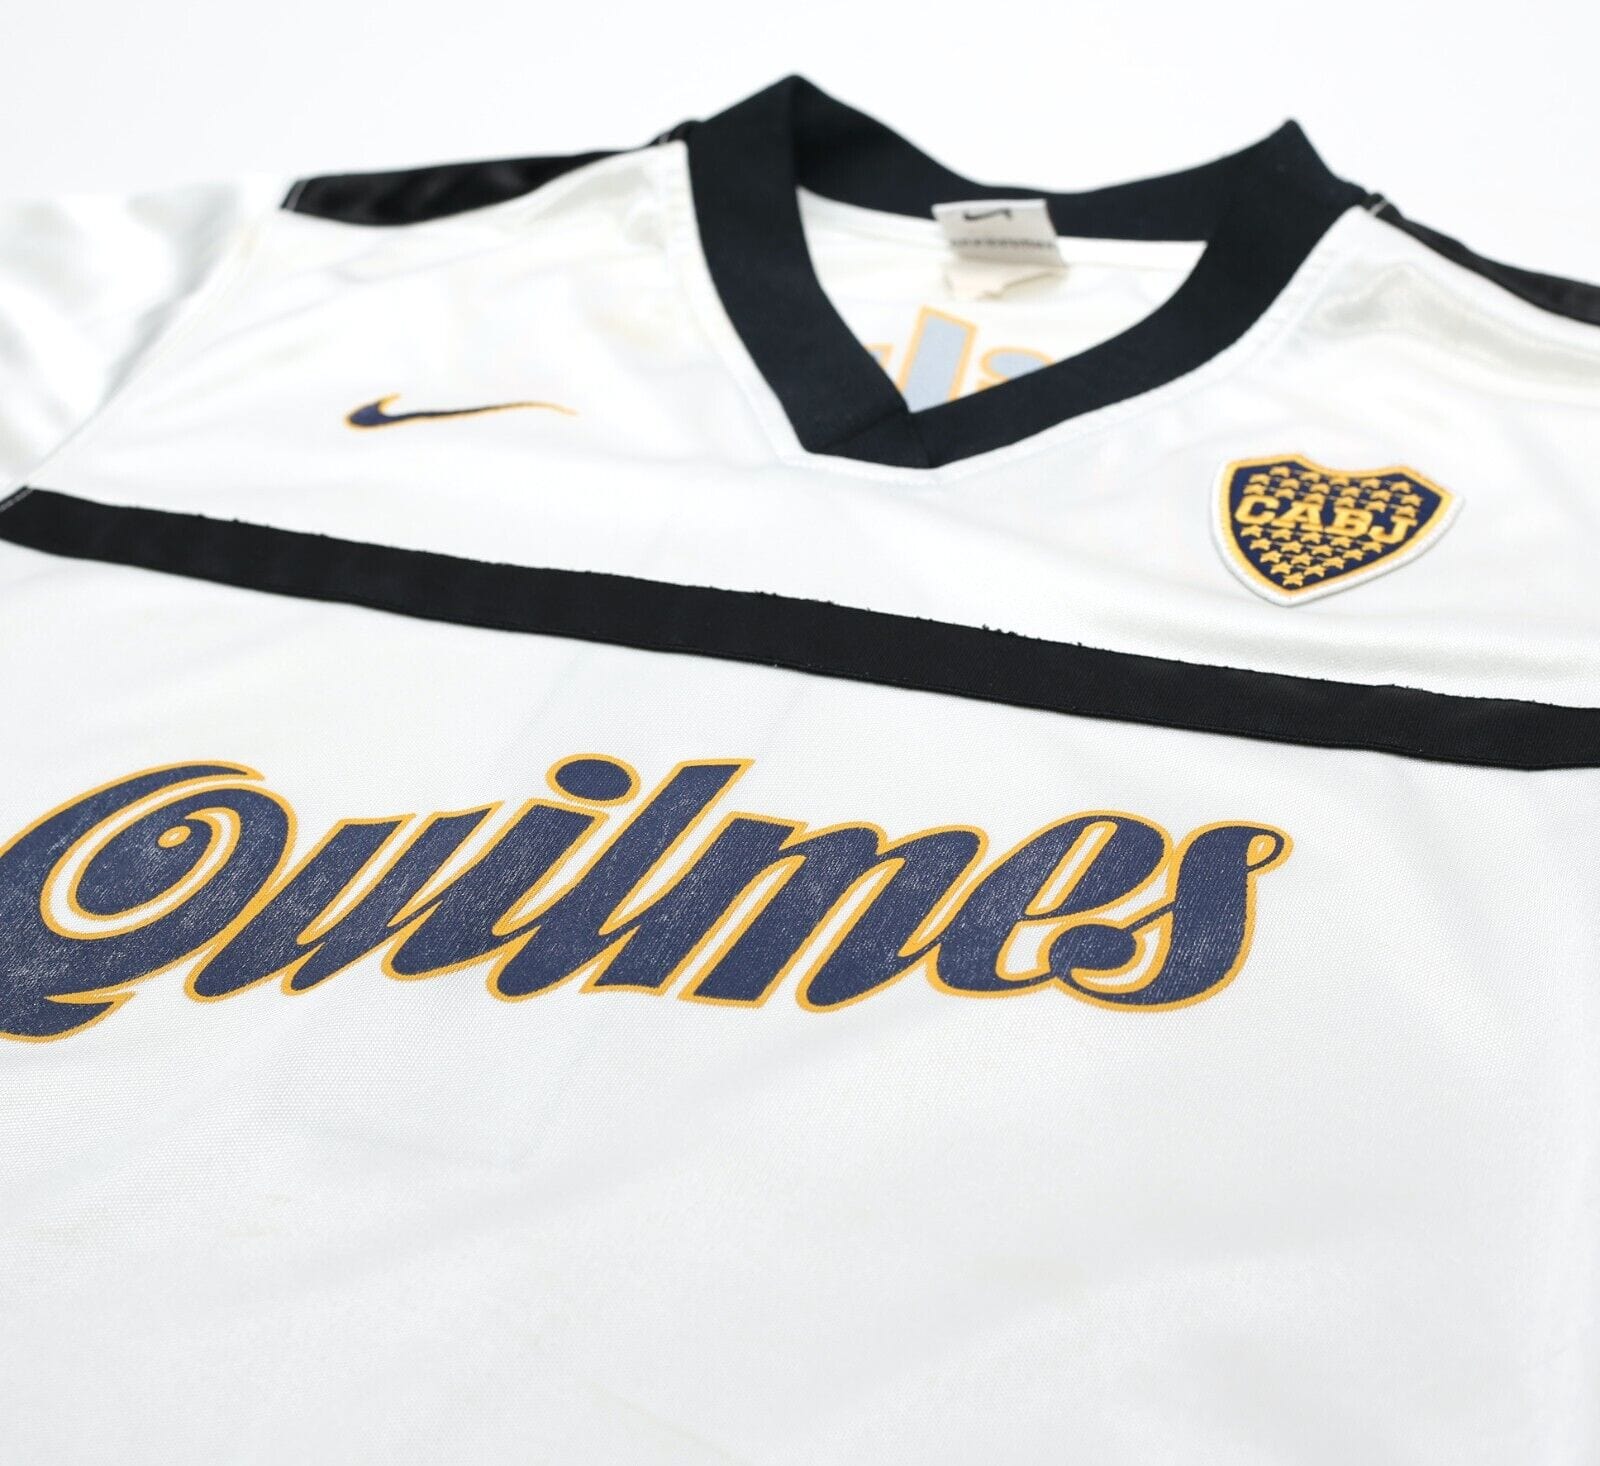 1997 BOCA JUNIORS Vintage Nike GK Football Shirt Jersey (XS/S) Goalkeeper